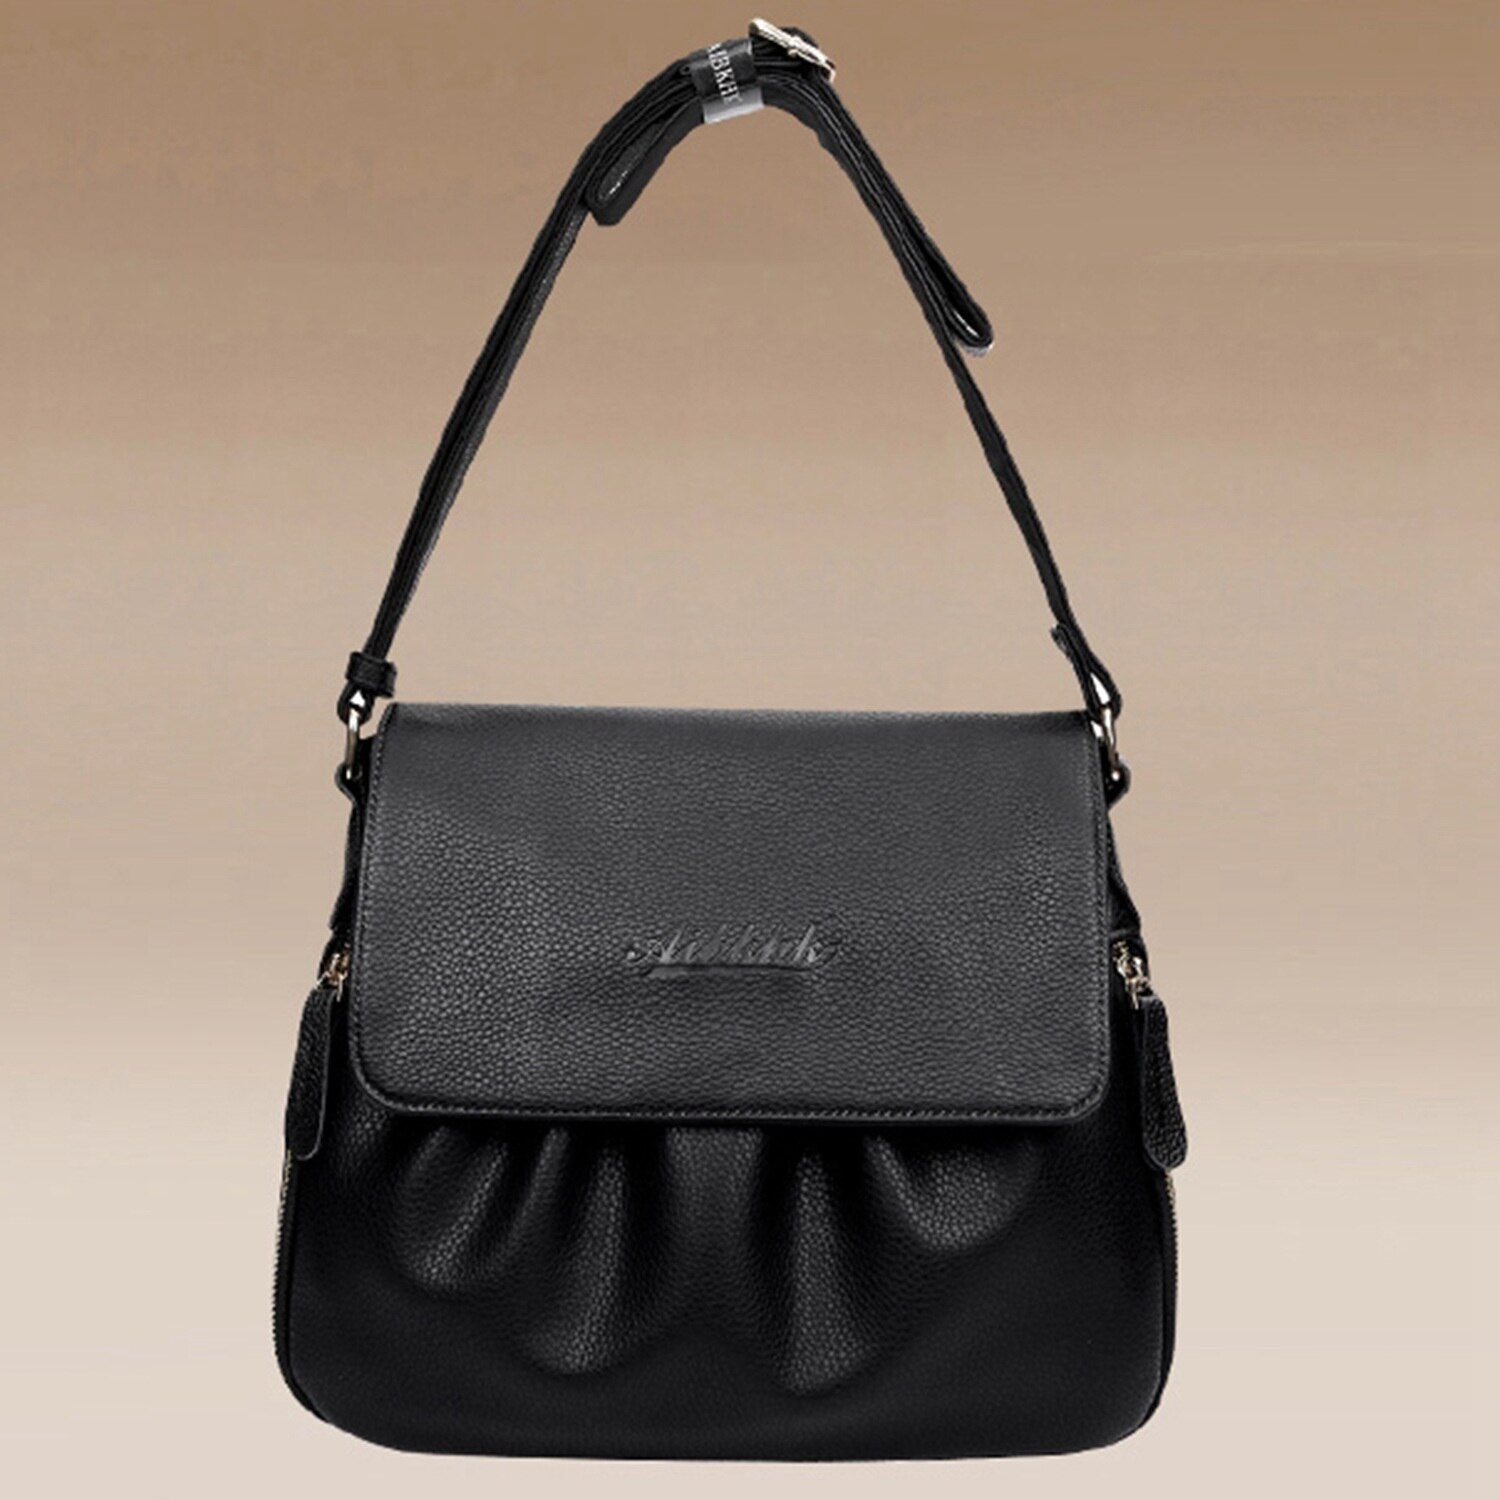 Aibkhk Leather Women'S Handbags Casual Female Shoulder Bags Women Messenger Crossbody Bag Travel Bag - ebowsos